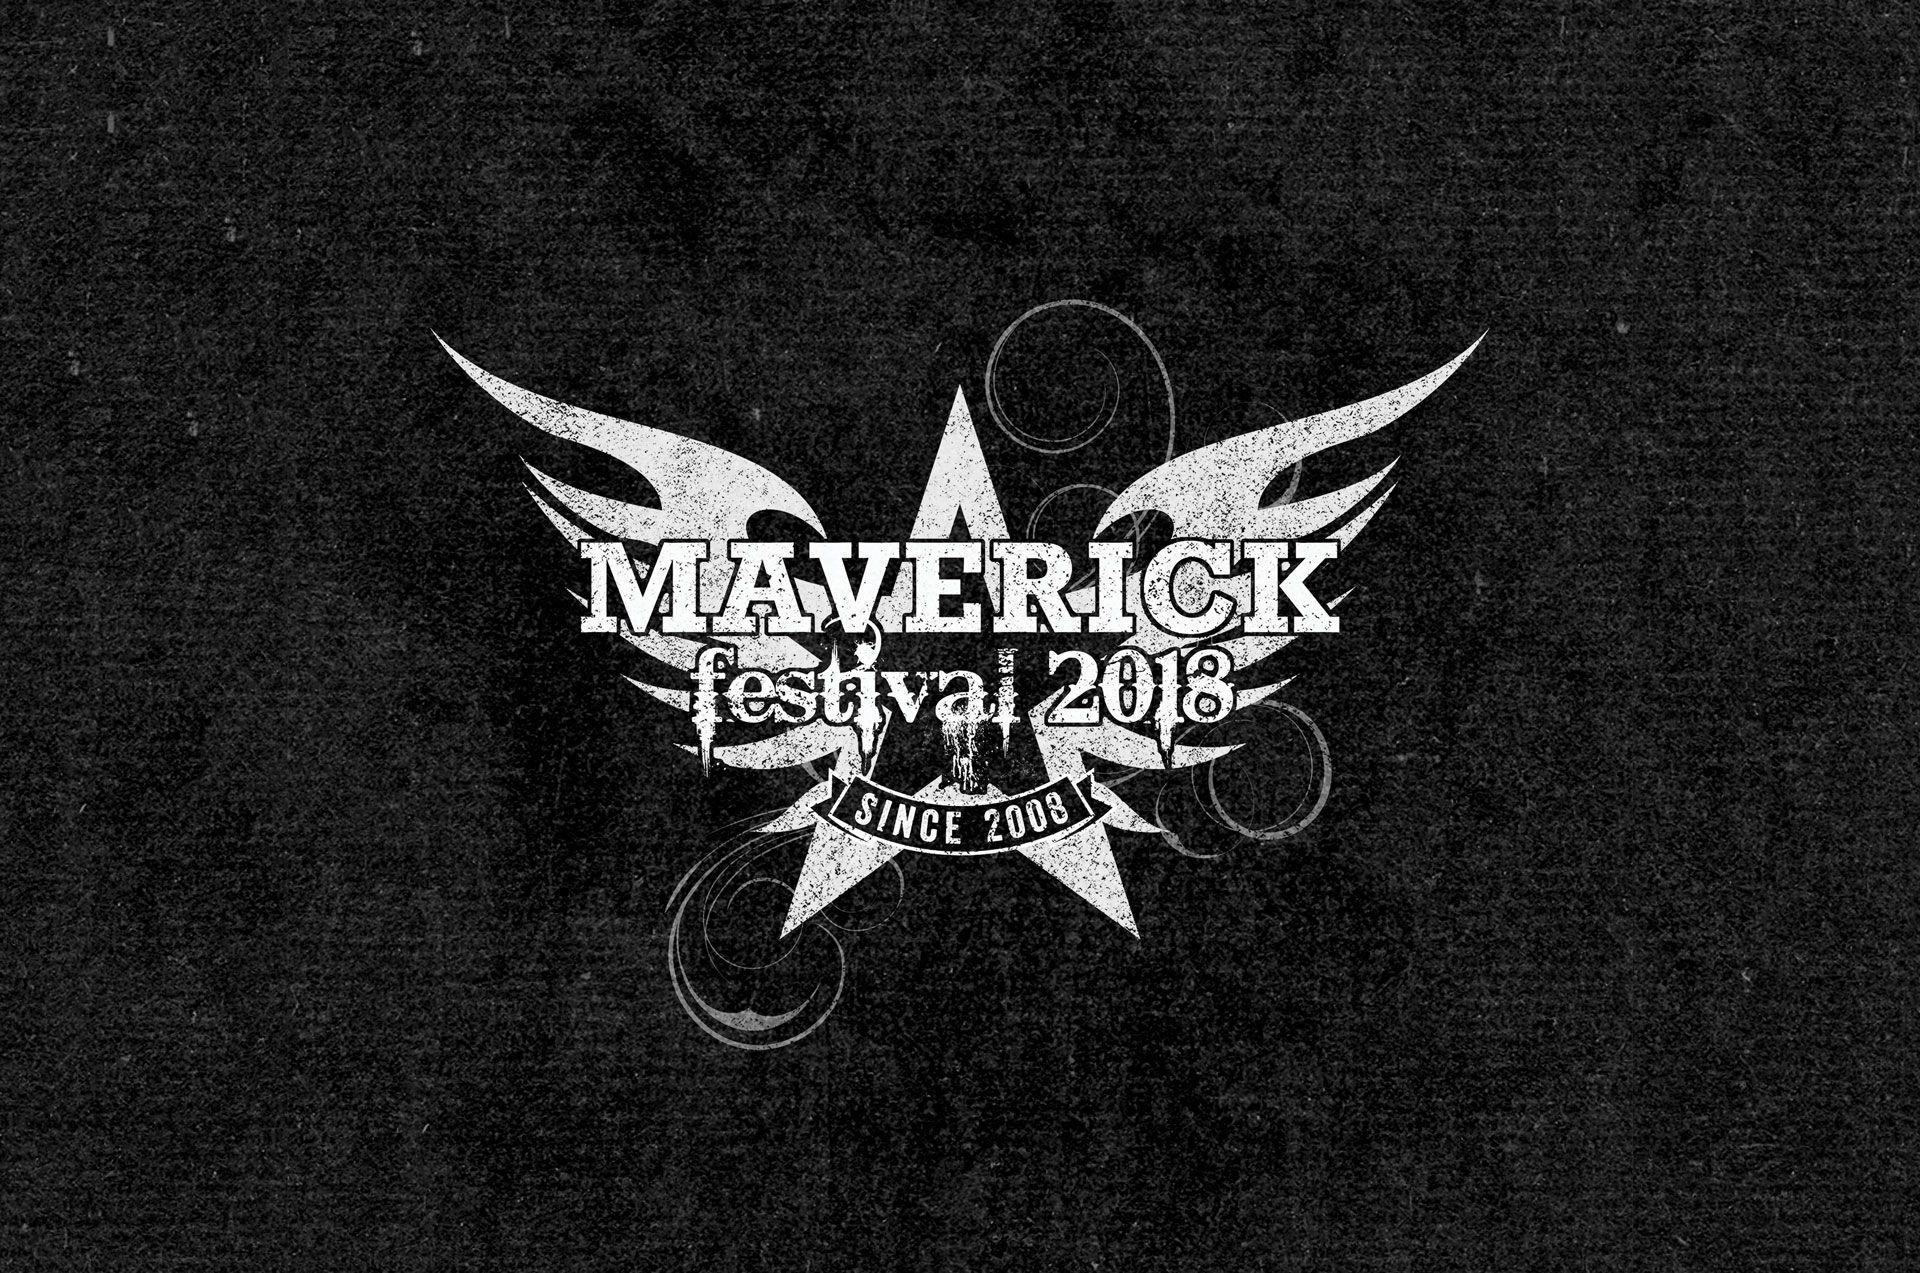 Maverick Logo - Tickets for Maverick Festival | Weekend Tickets | Day Tickets | Camping